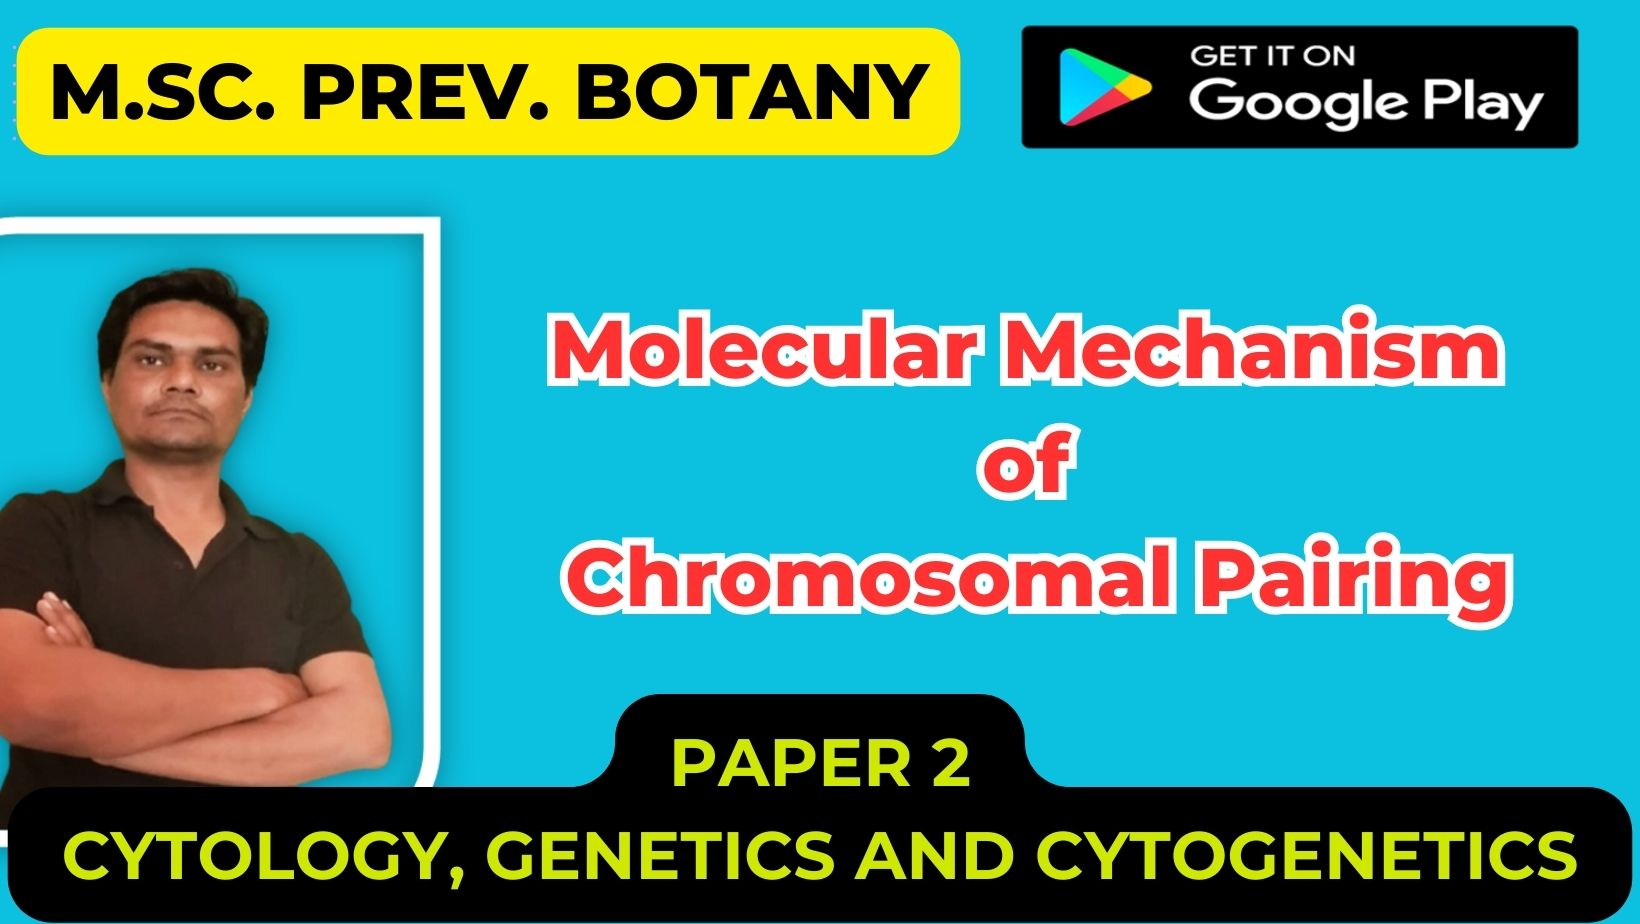 Molecular Mechanism of Chromosomal Pairing